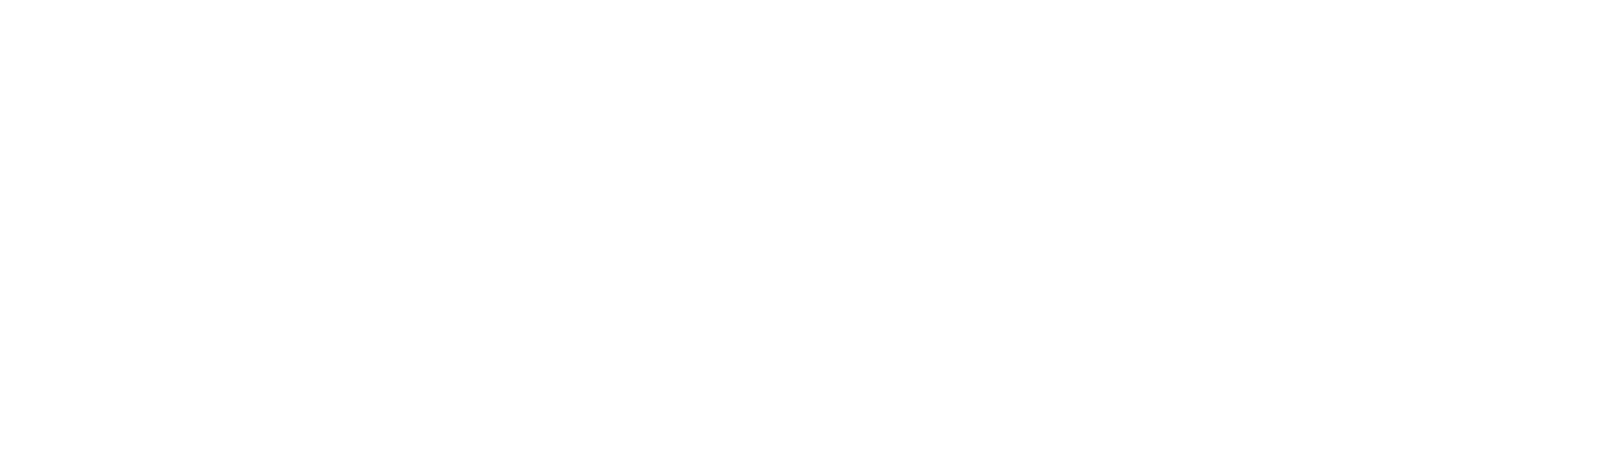 Boise Cascade
 Logo groß für dunkle Hintergründe (transparentes PNG)